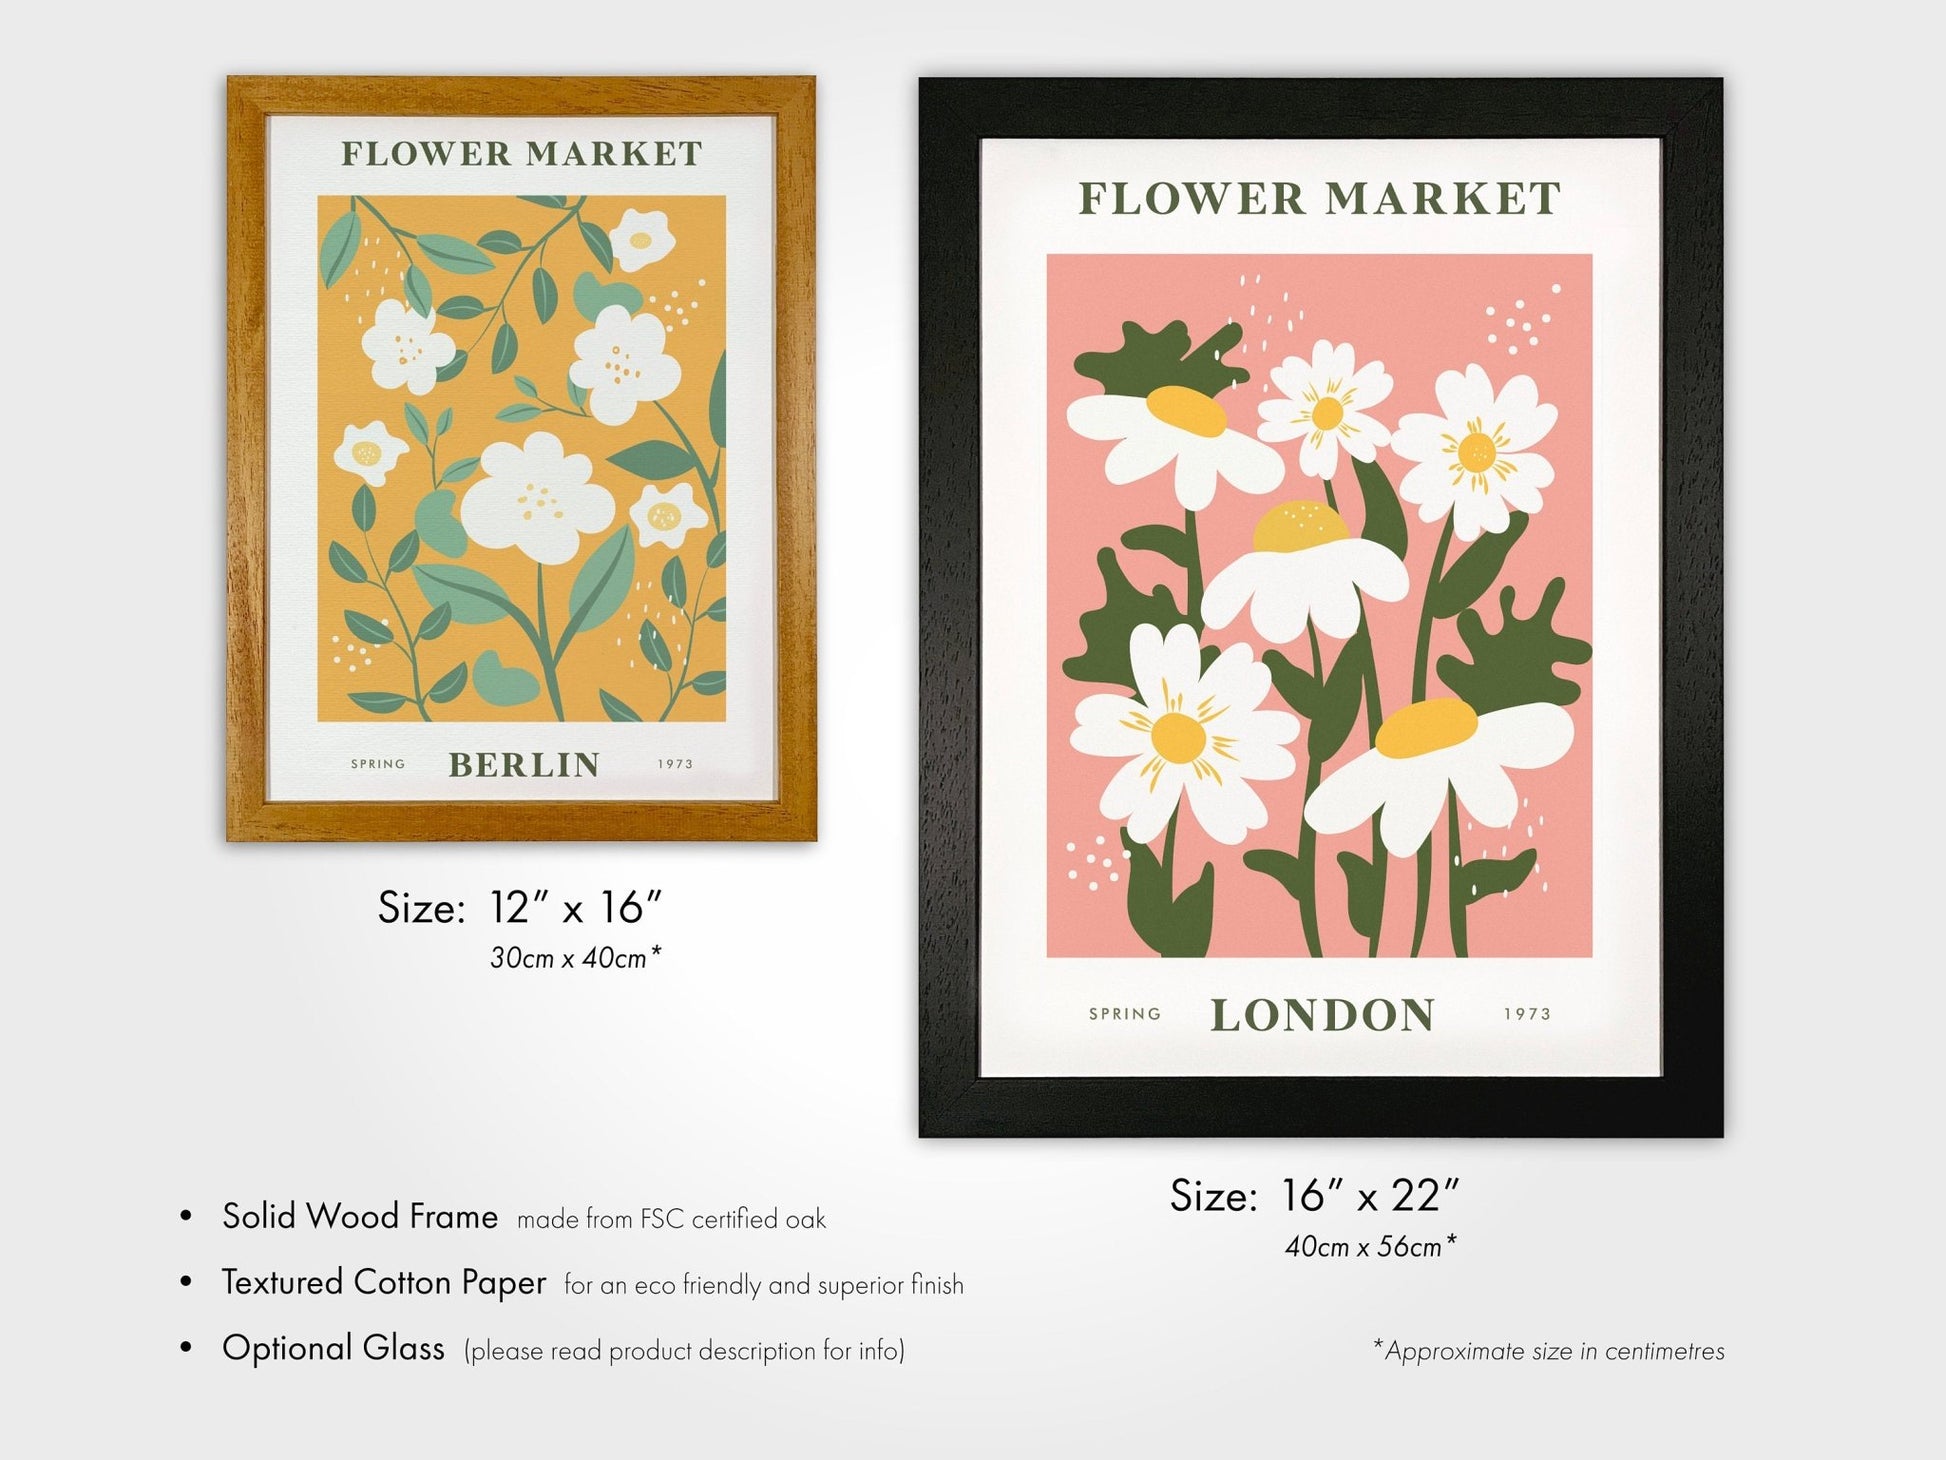 LONDON Flower Market Poster - Pathos Studio - Art Prints